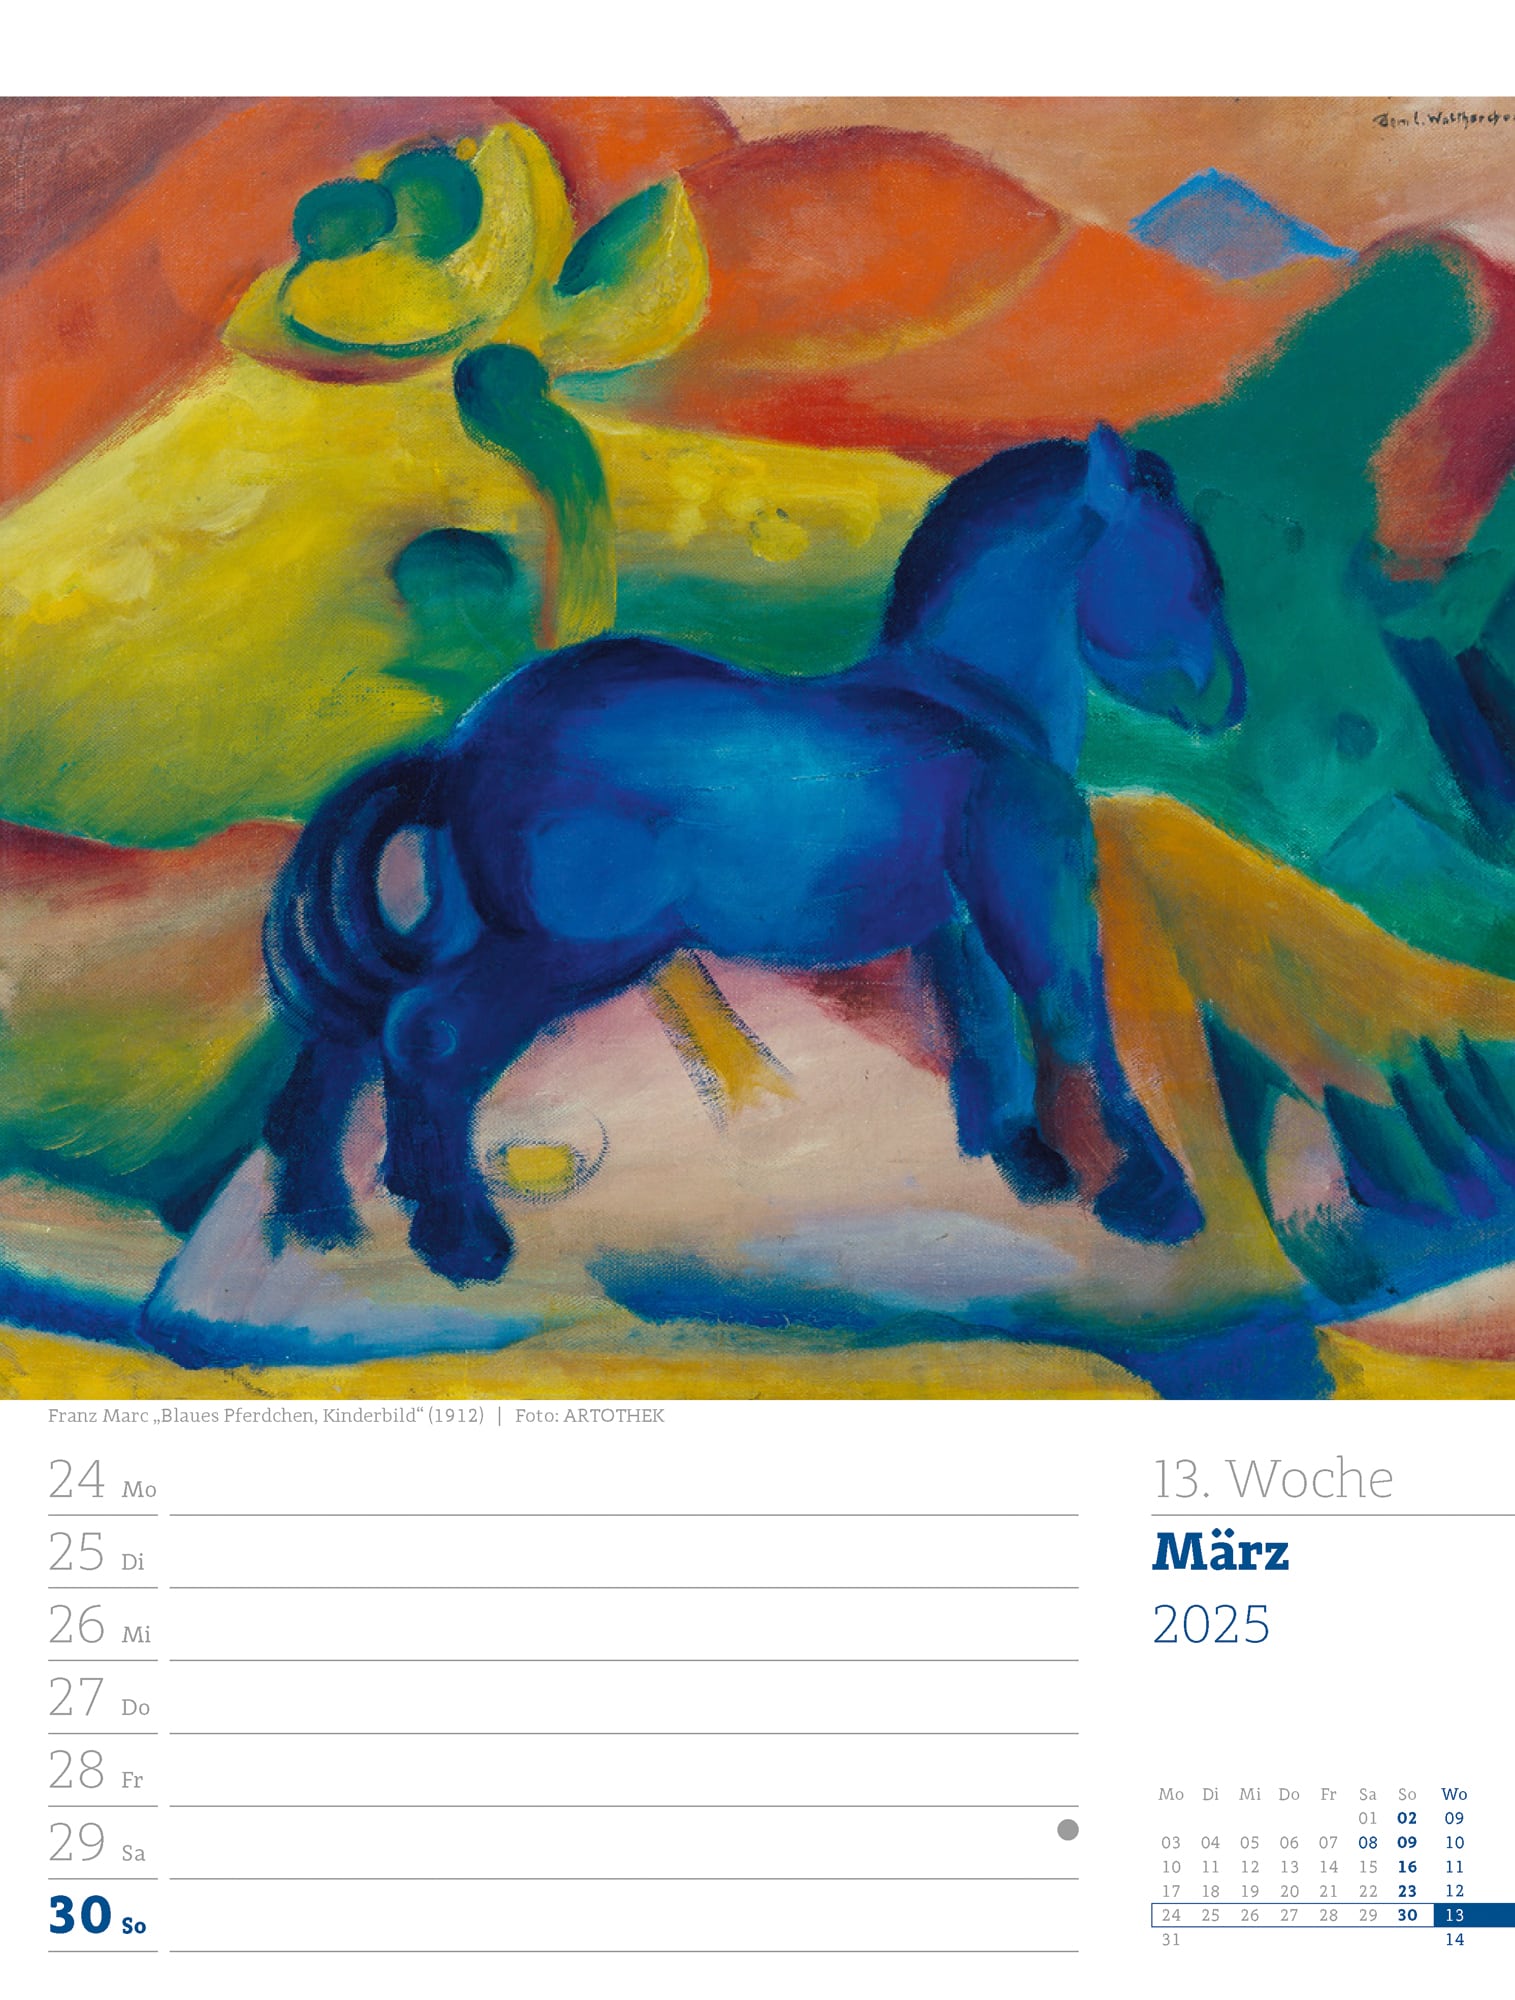 Ackermann Calendar World of Art 2025 - Weekly Planner - Inside View 16